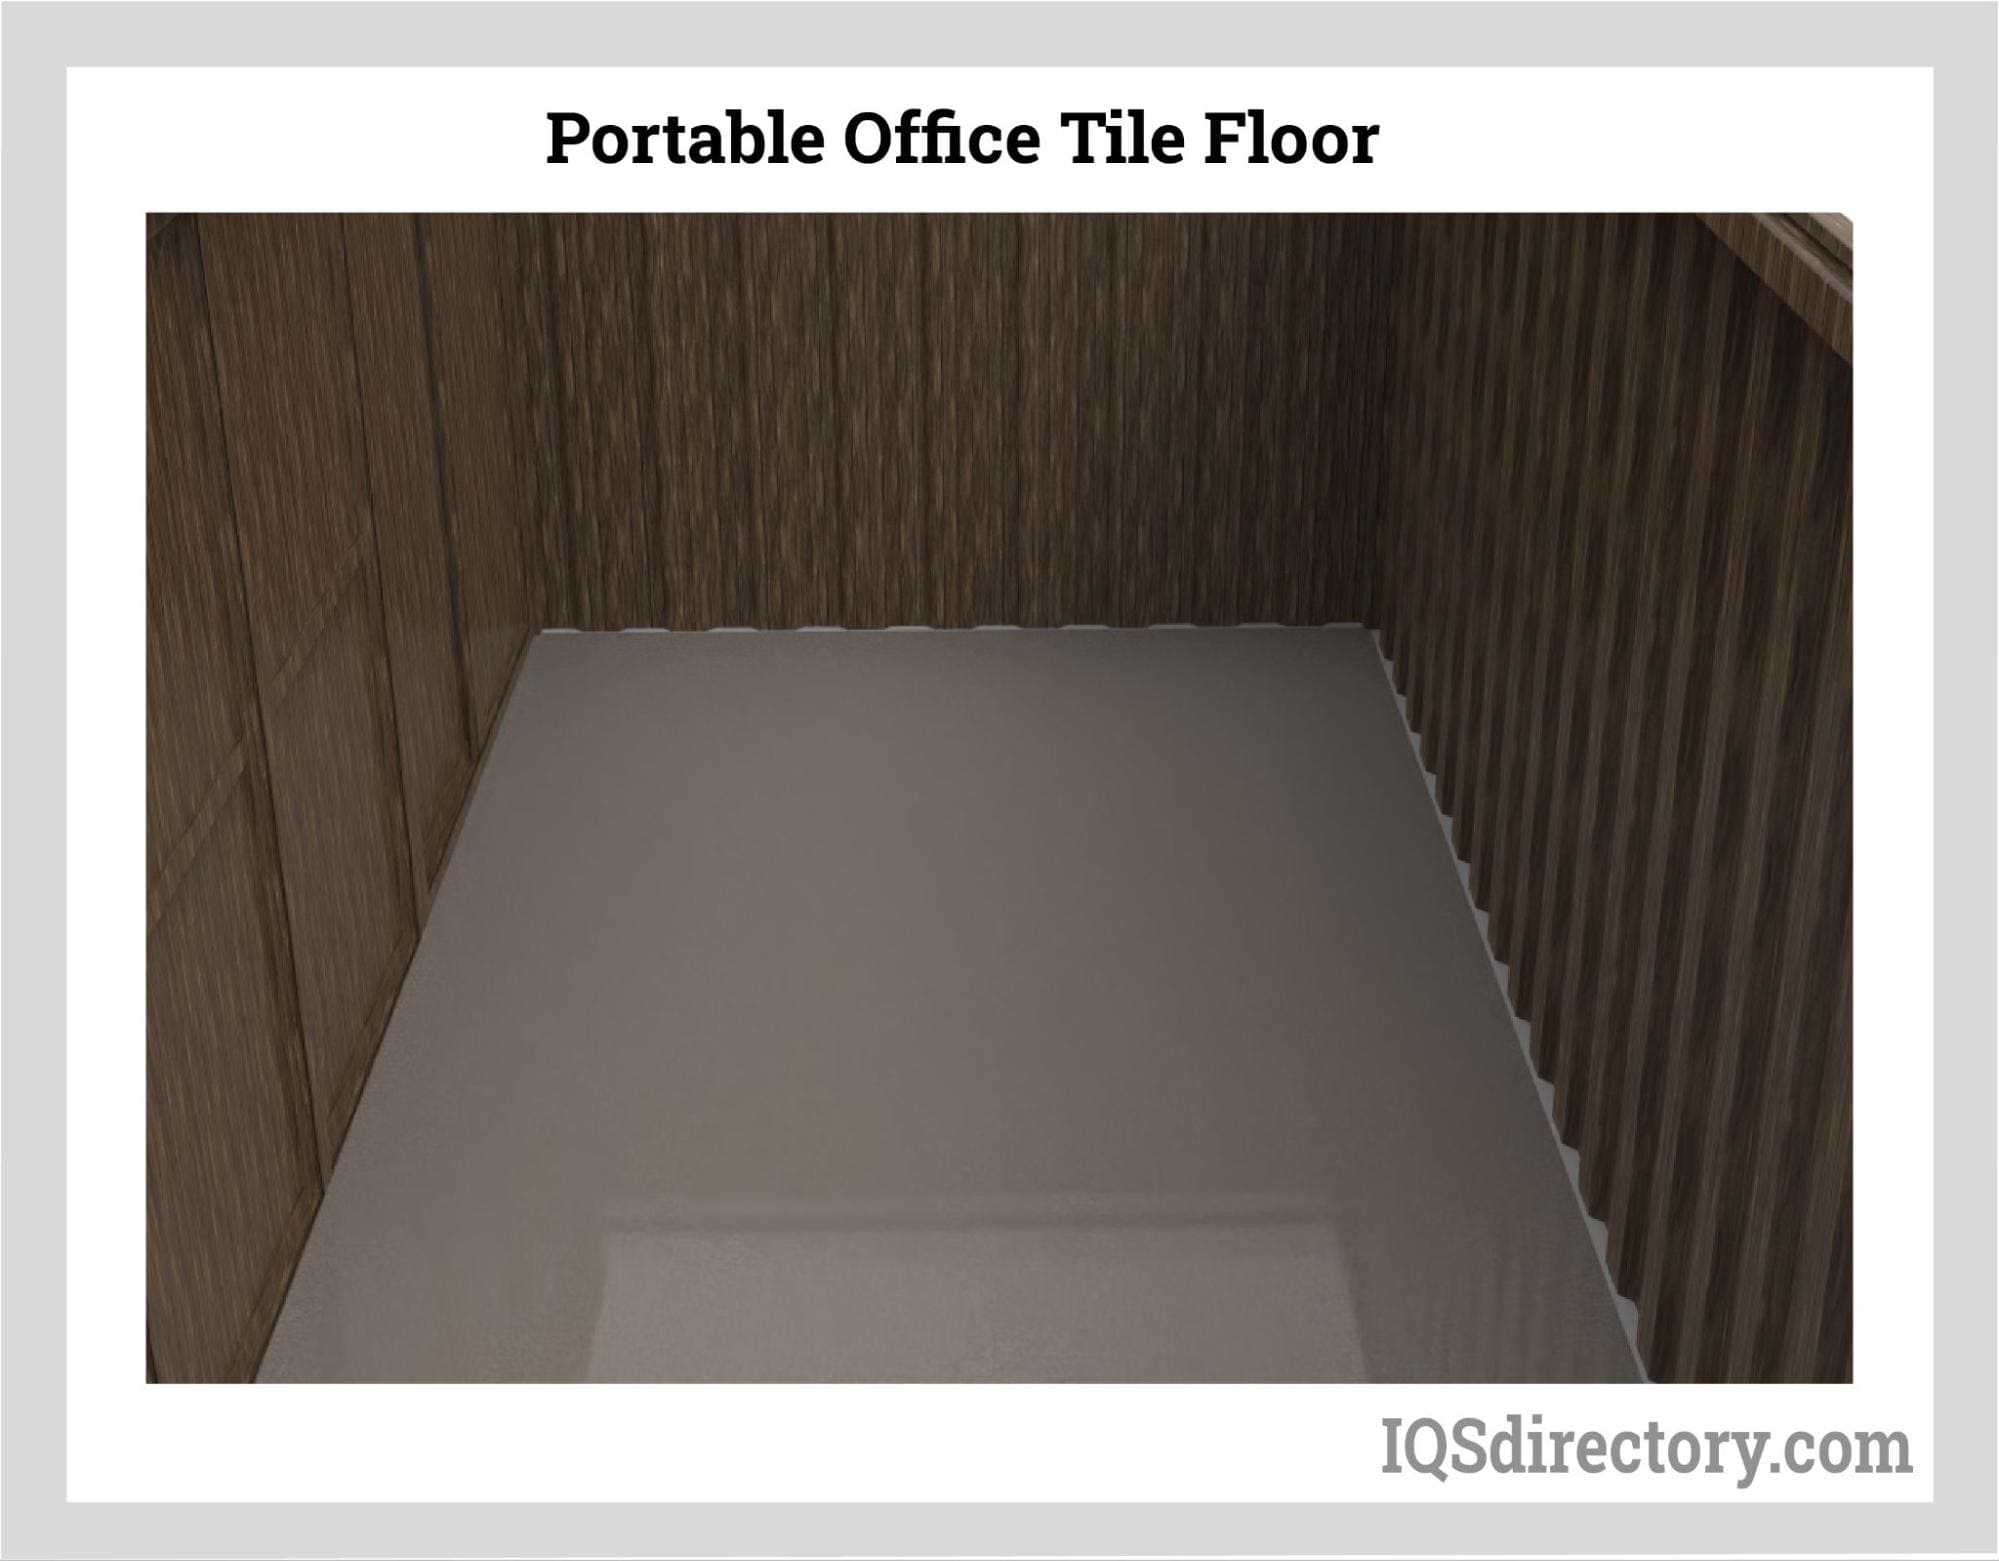 Portable Office Tile Floor